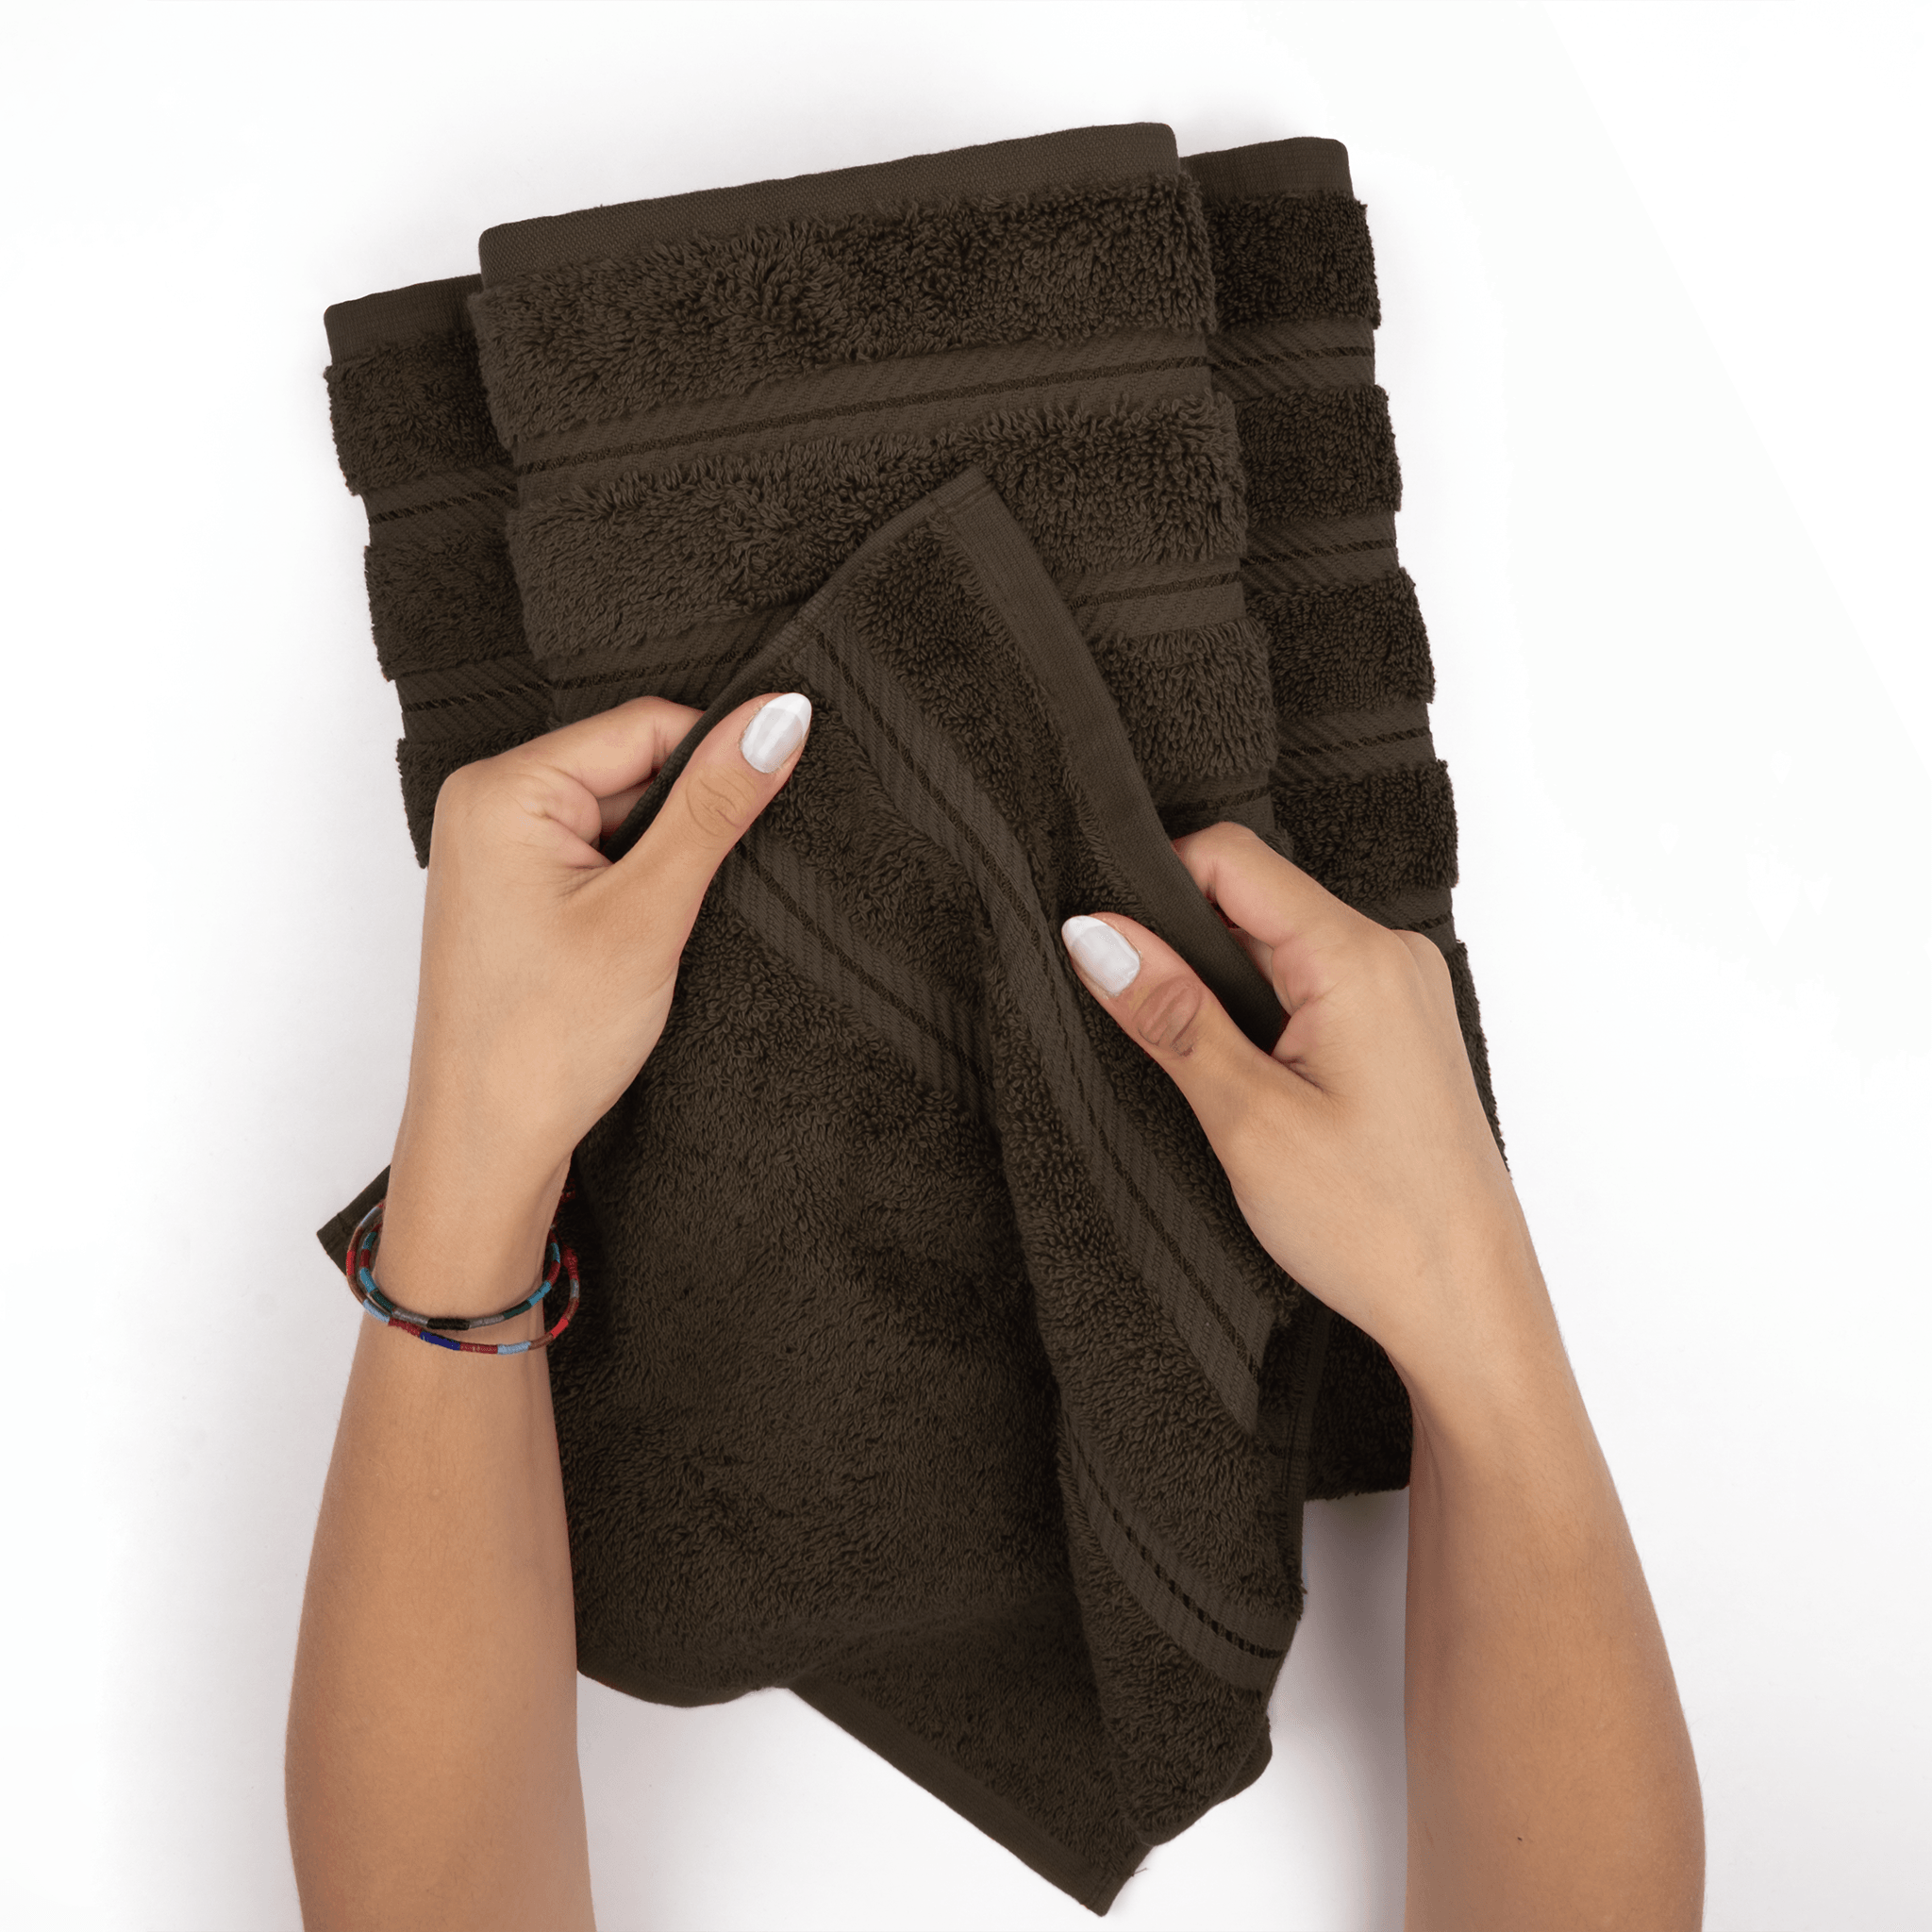 American Soft Linen - 6 Piece Turkish Cotton Bath Towel Set - Chocolate-Brown - 5